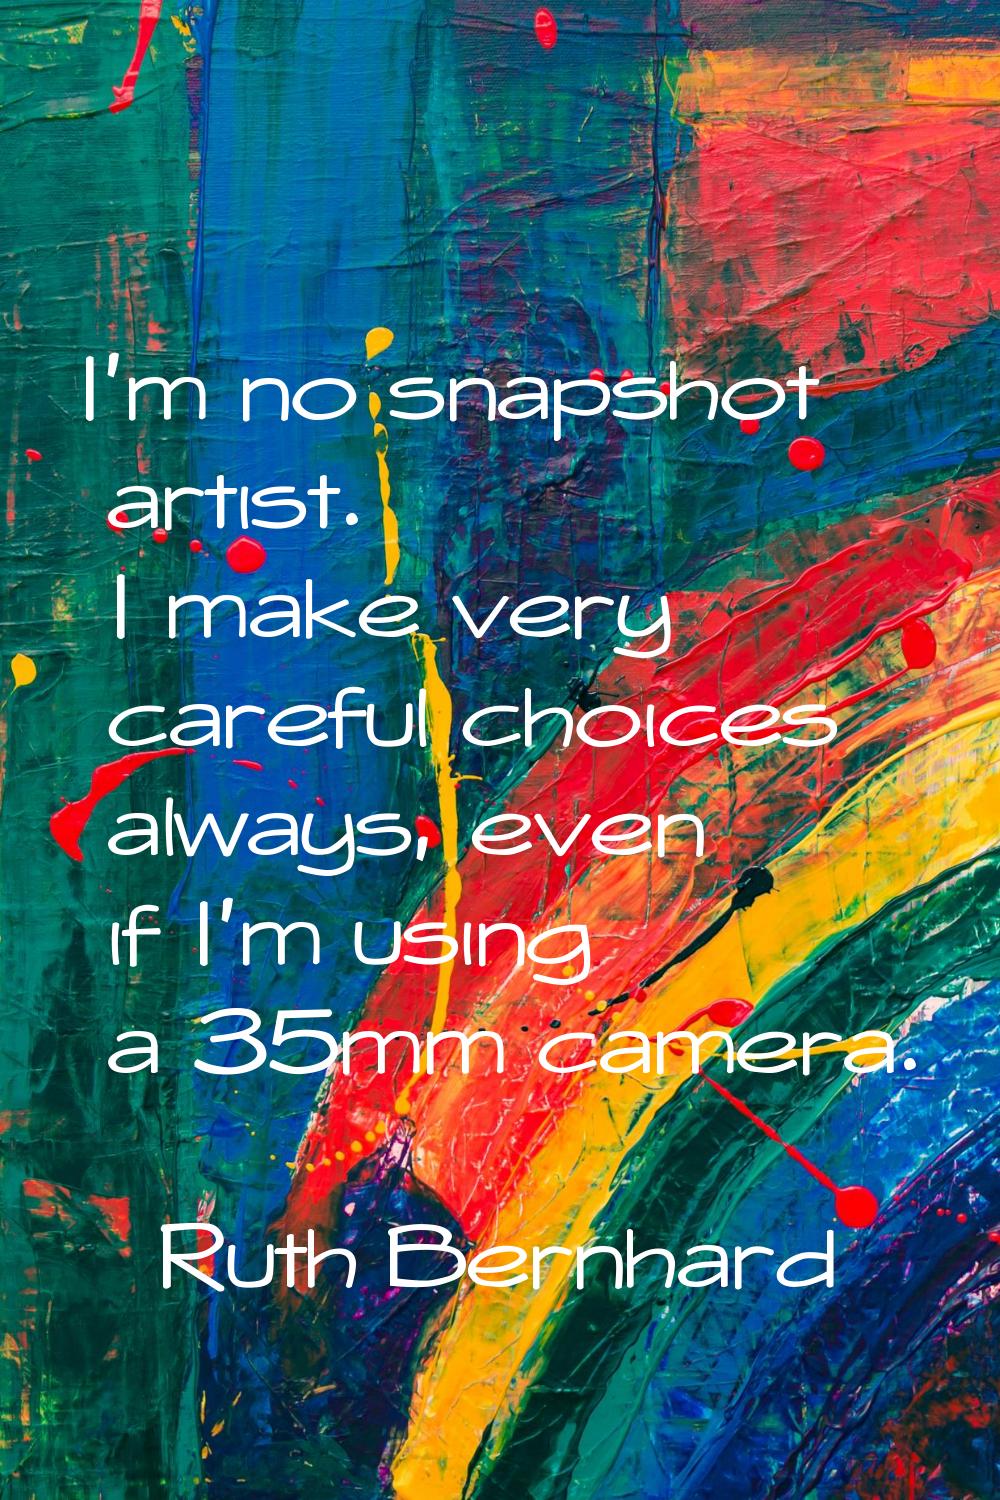 I'm no snapshot artist. I make very careful choices always, even if I'm using a 35mm camera.